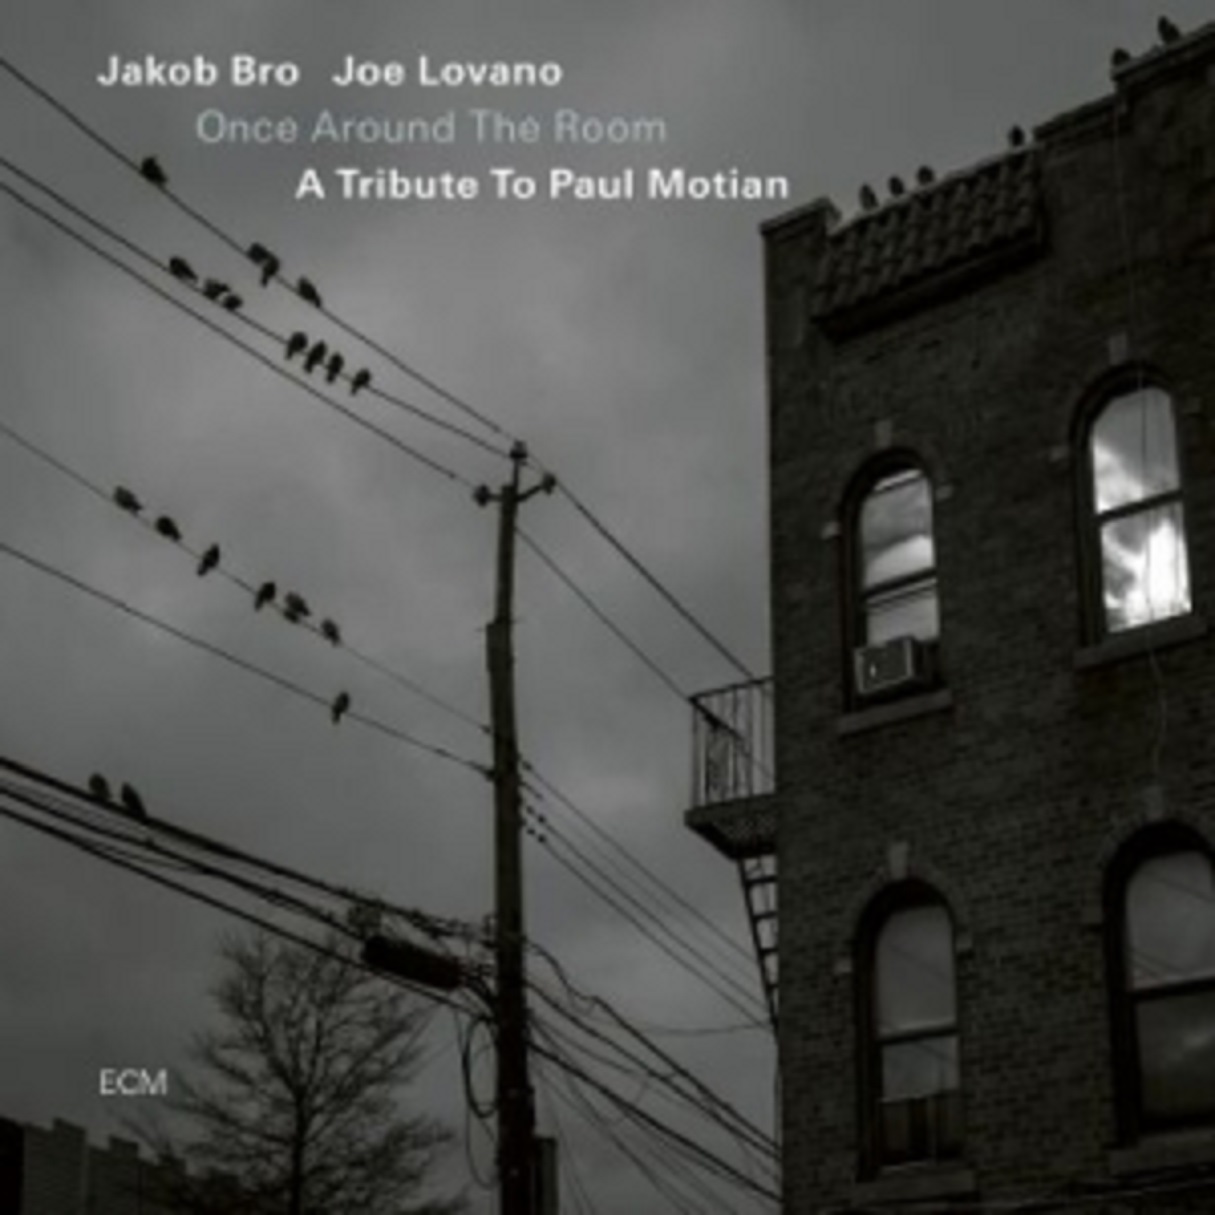 Once Around the Room. A Tribute to Paul Motian | Bro Jakob Lovano Joe